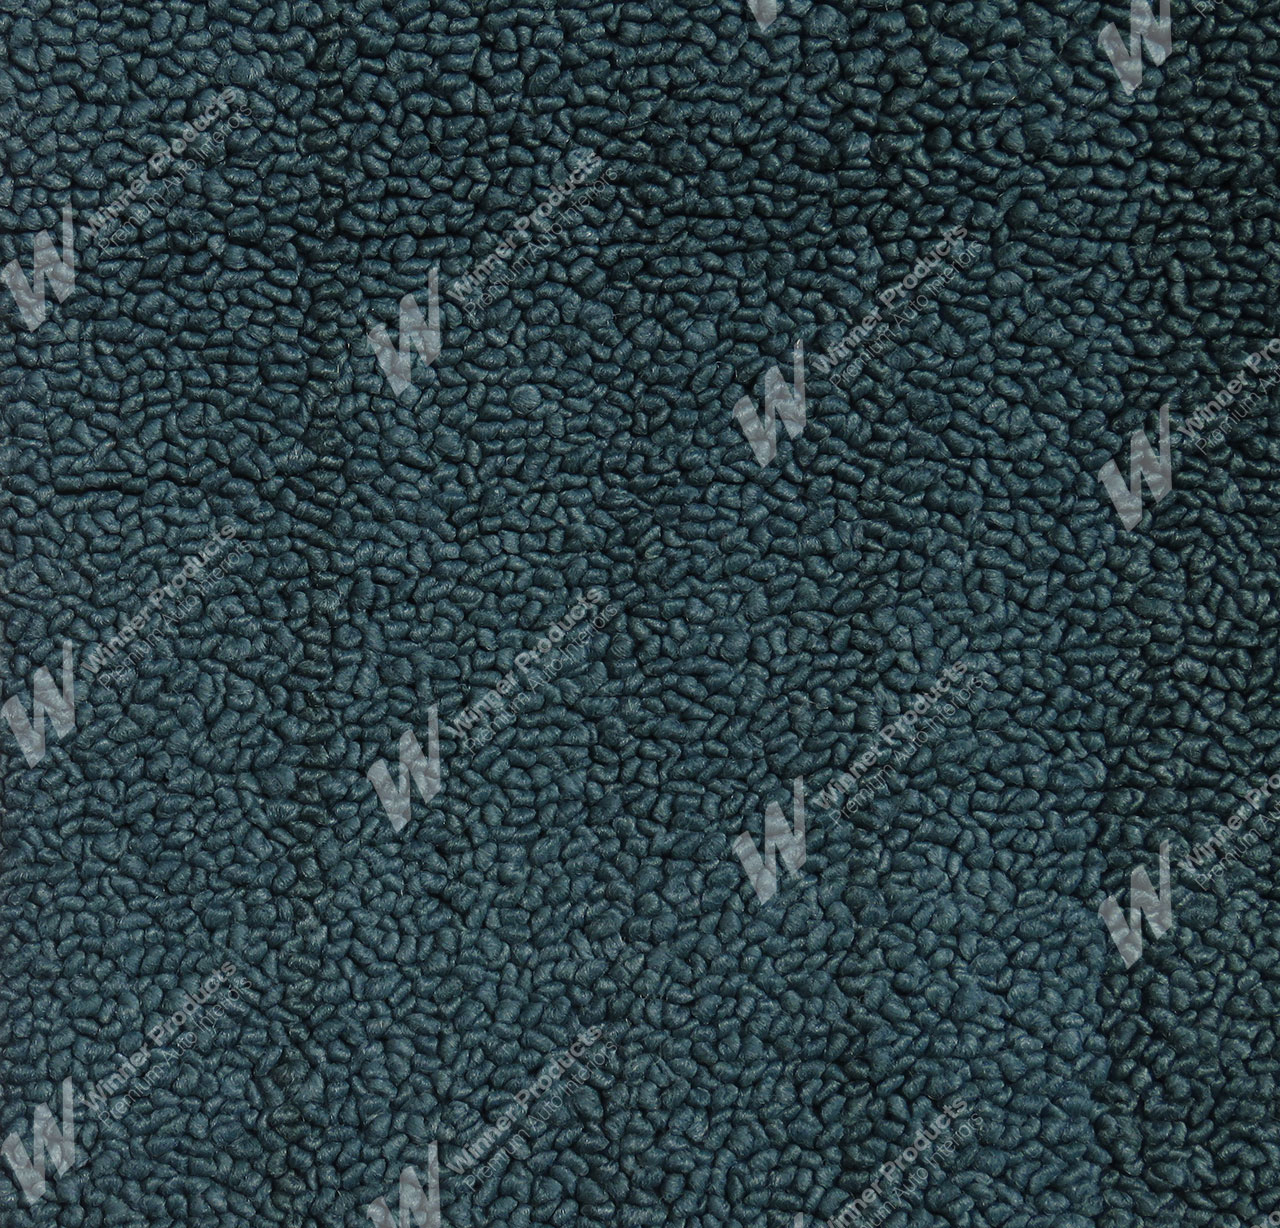 Holden Torana LC Torana S Coupe 43A Turquoise Mist Carpet (Image 1 of 1)